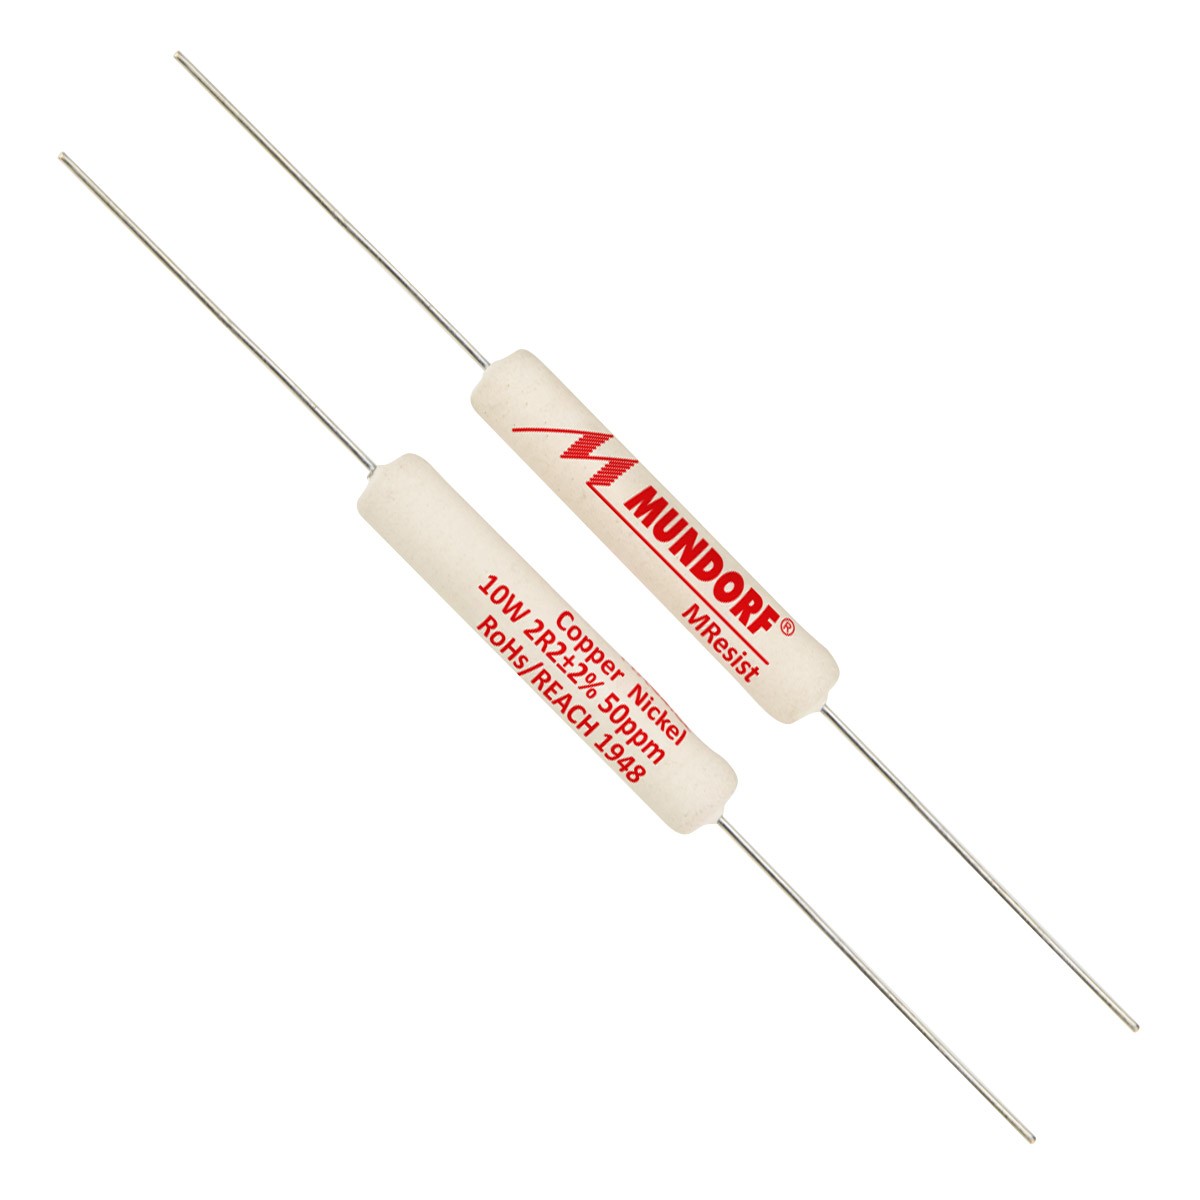 MUNDORF MRESIST CLASSIC Resistor 10W 5.6 Ohm